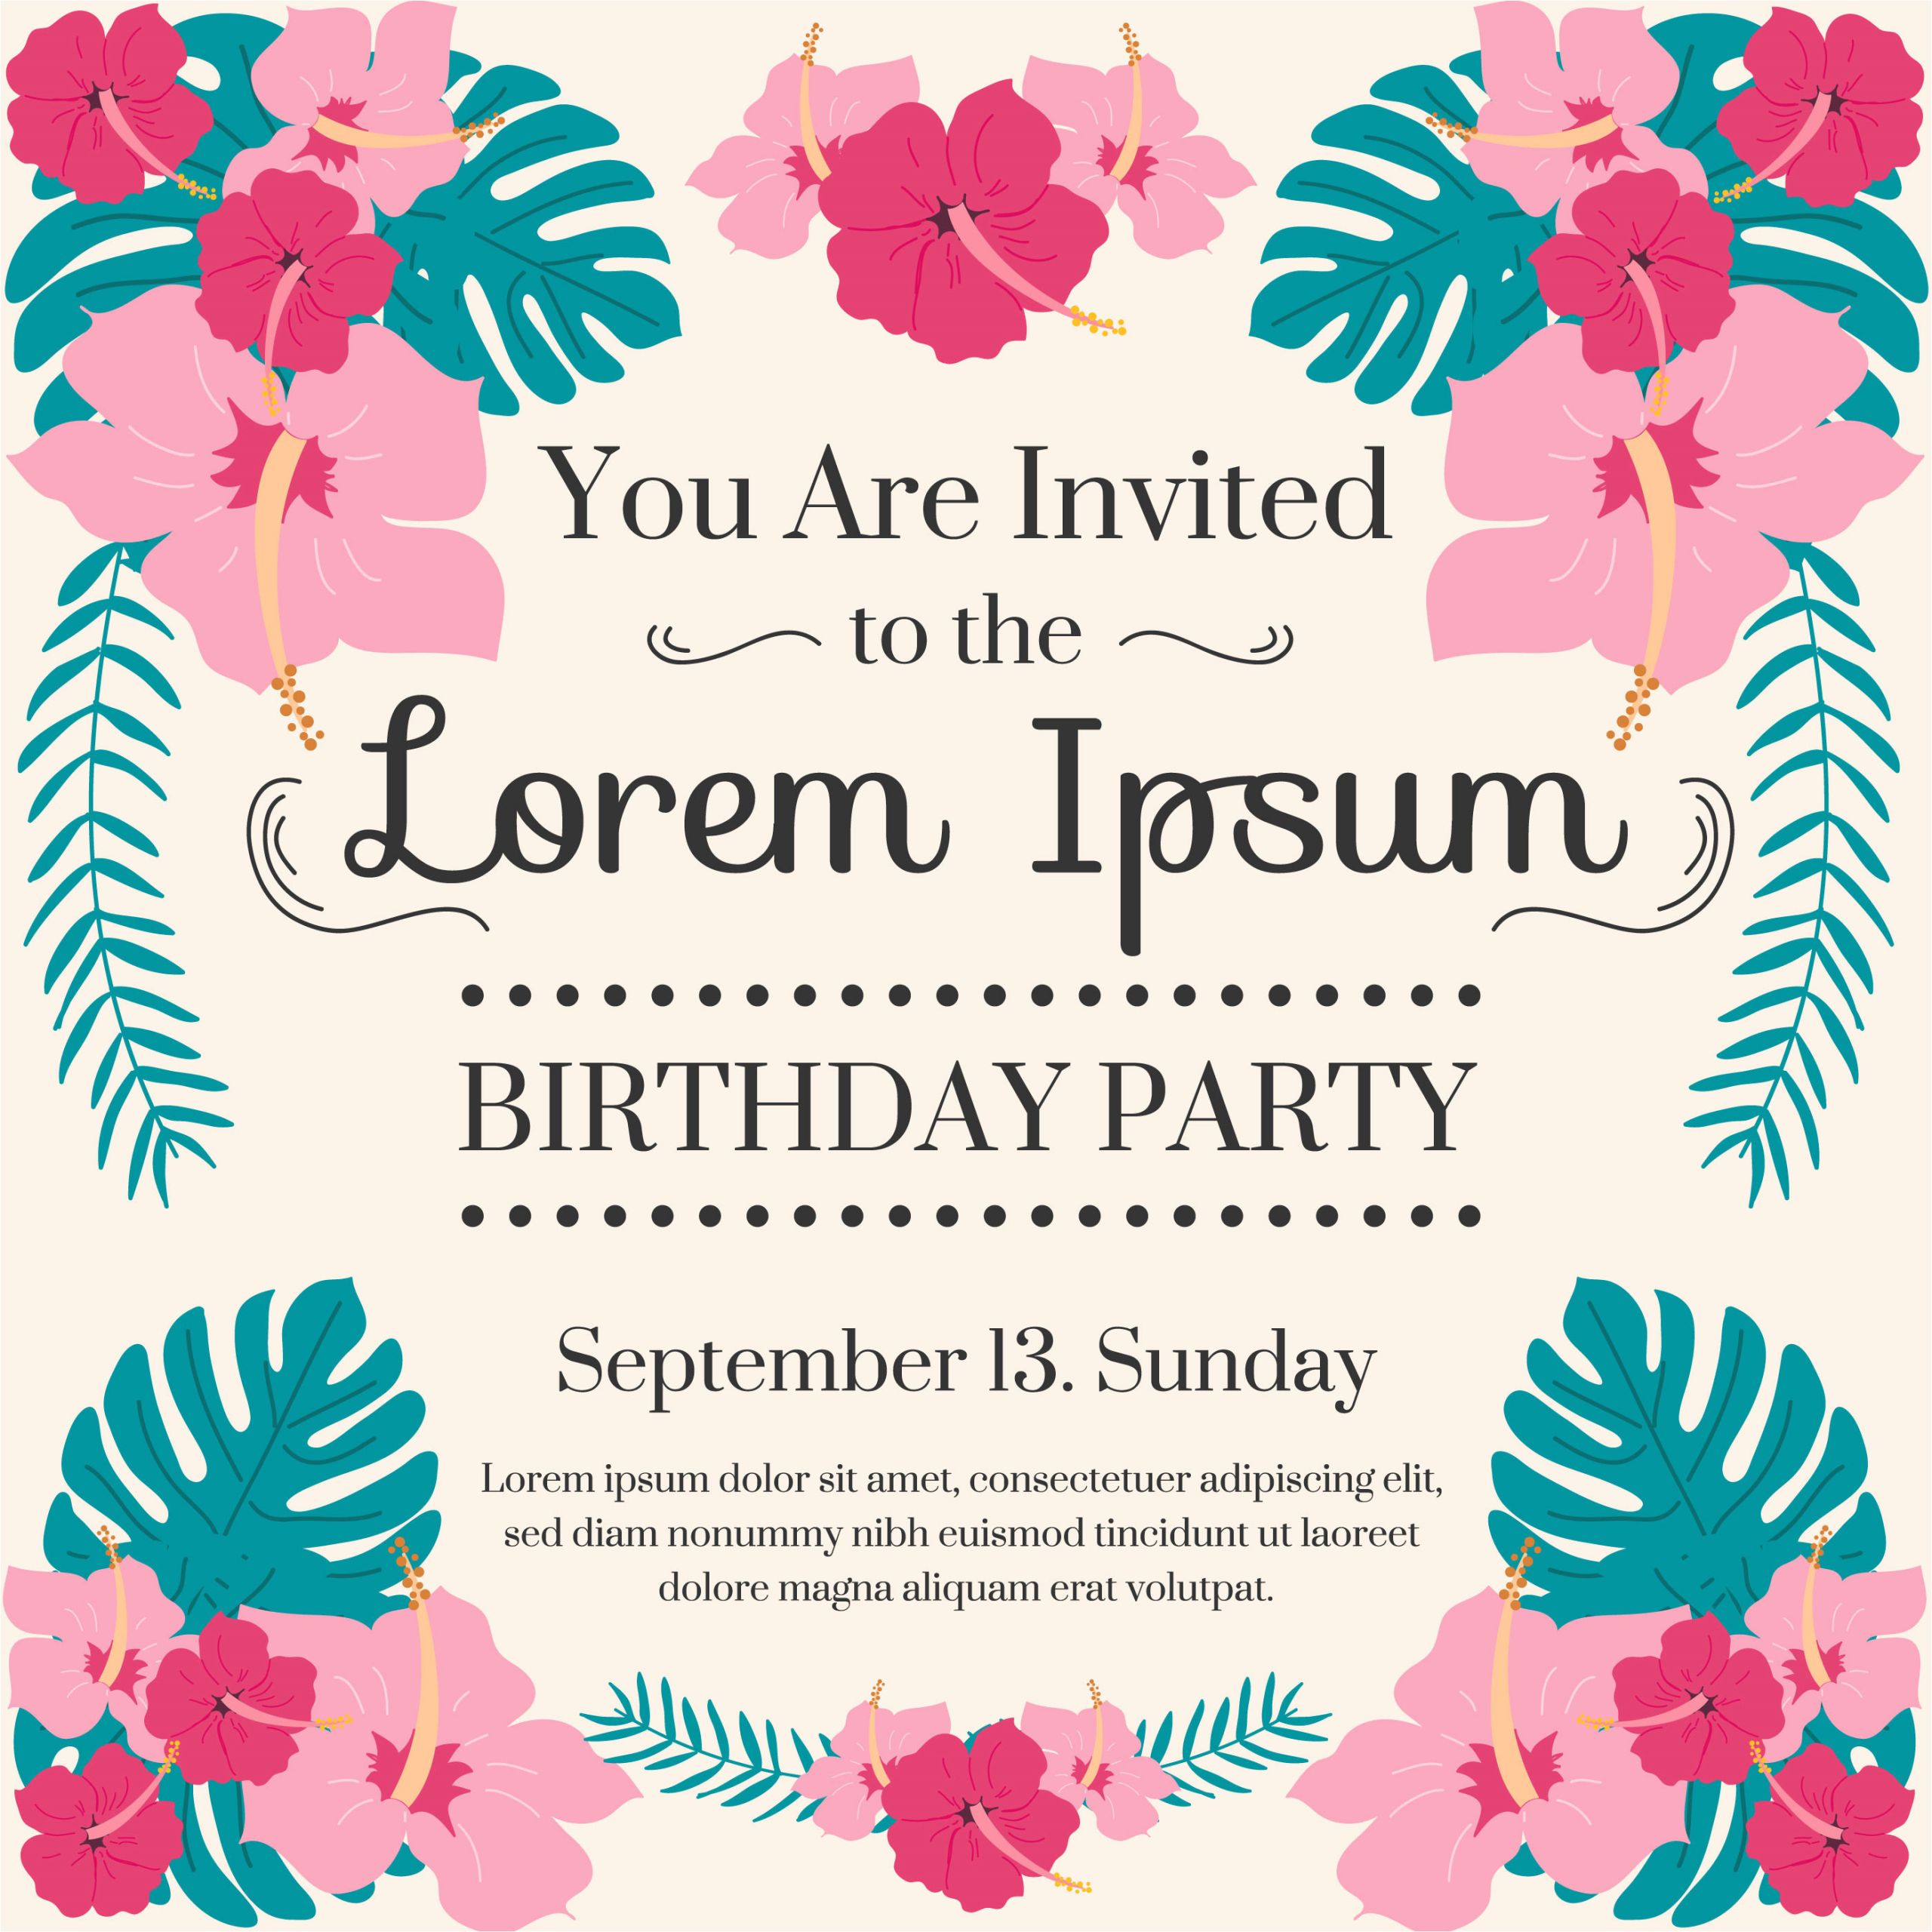 187195 birthday party invitation vector